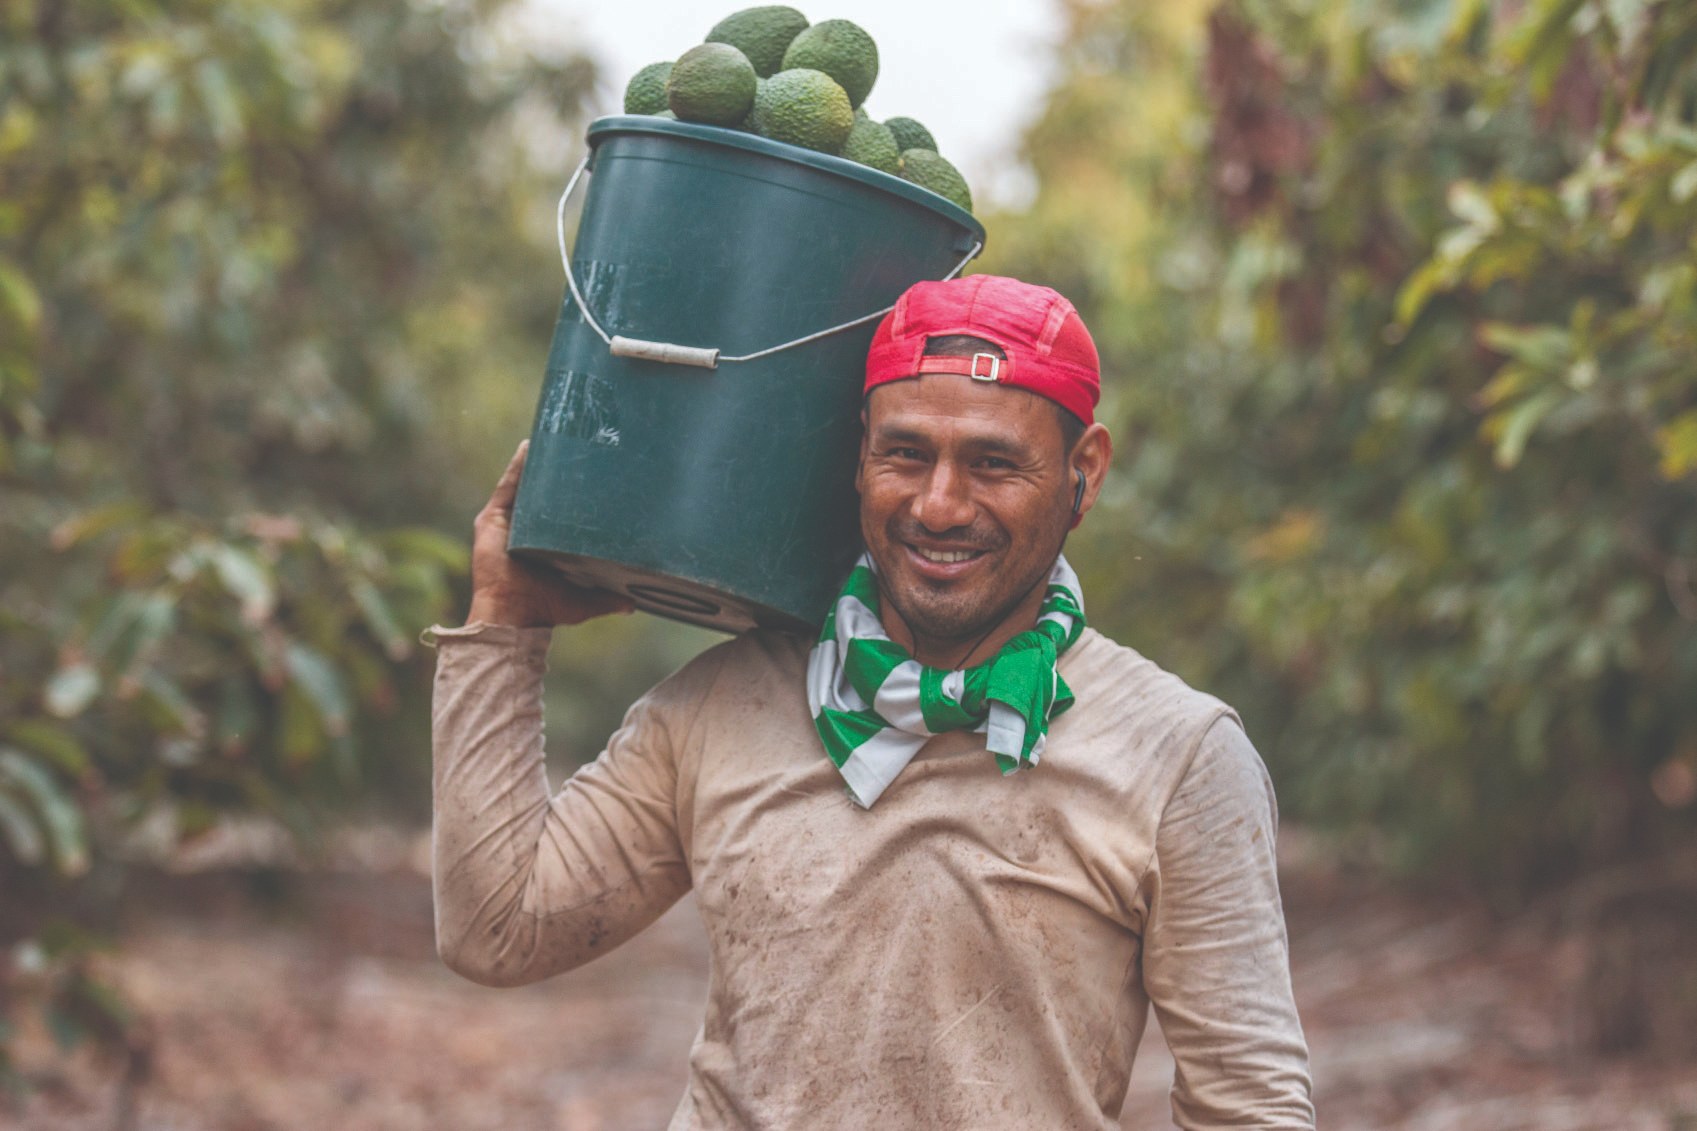 A farmer carries a bucket of avocados